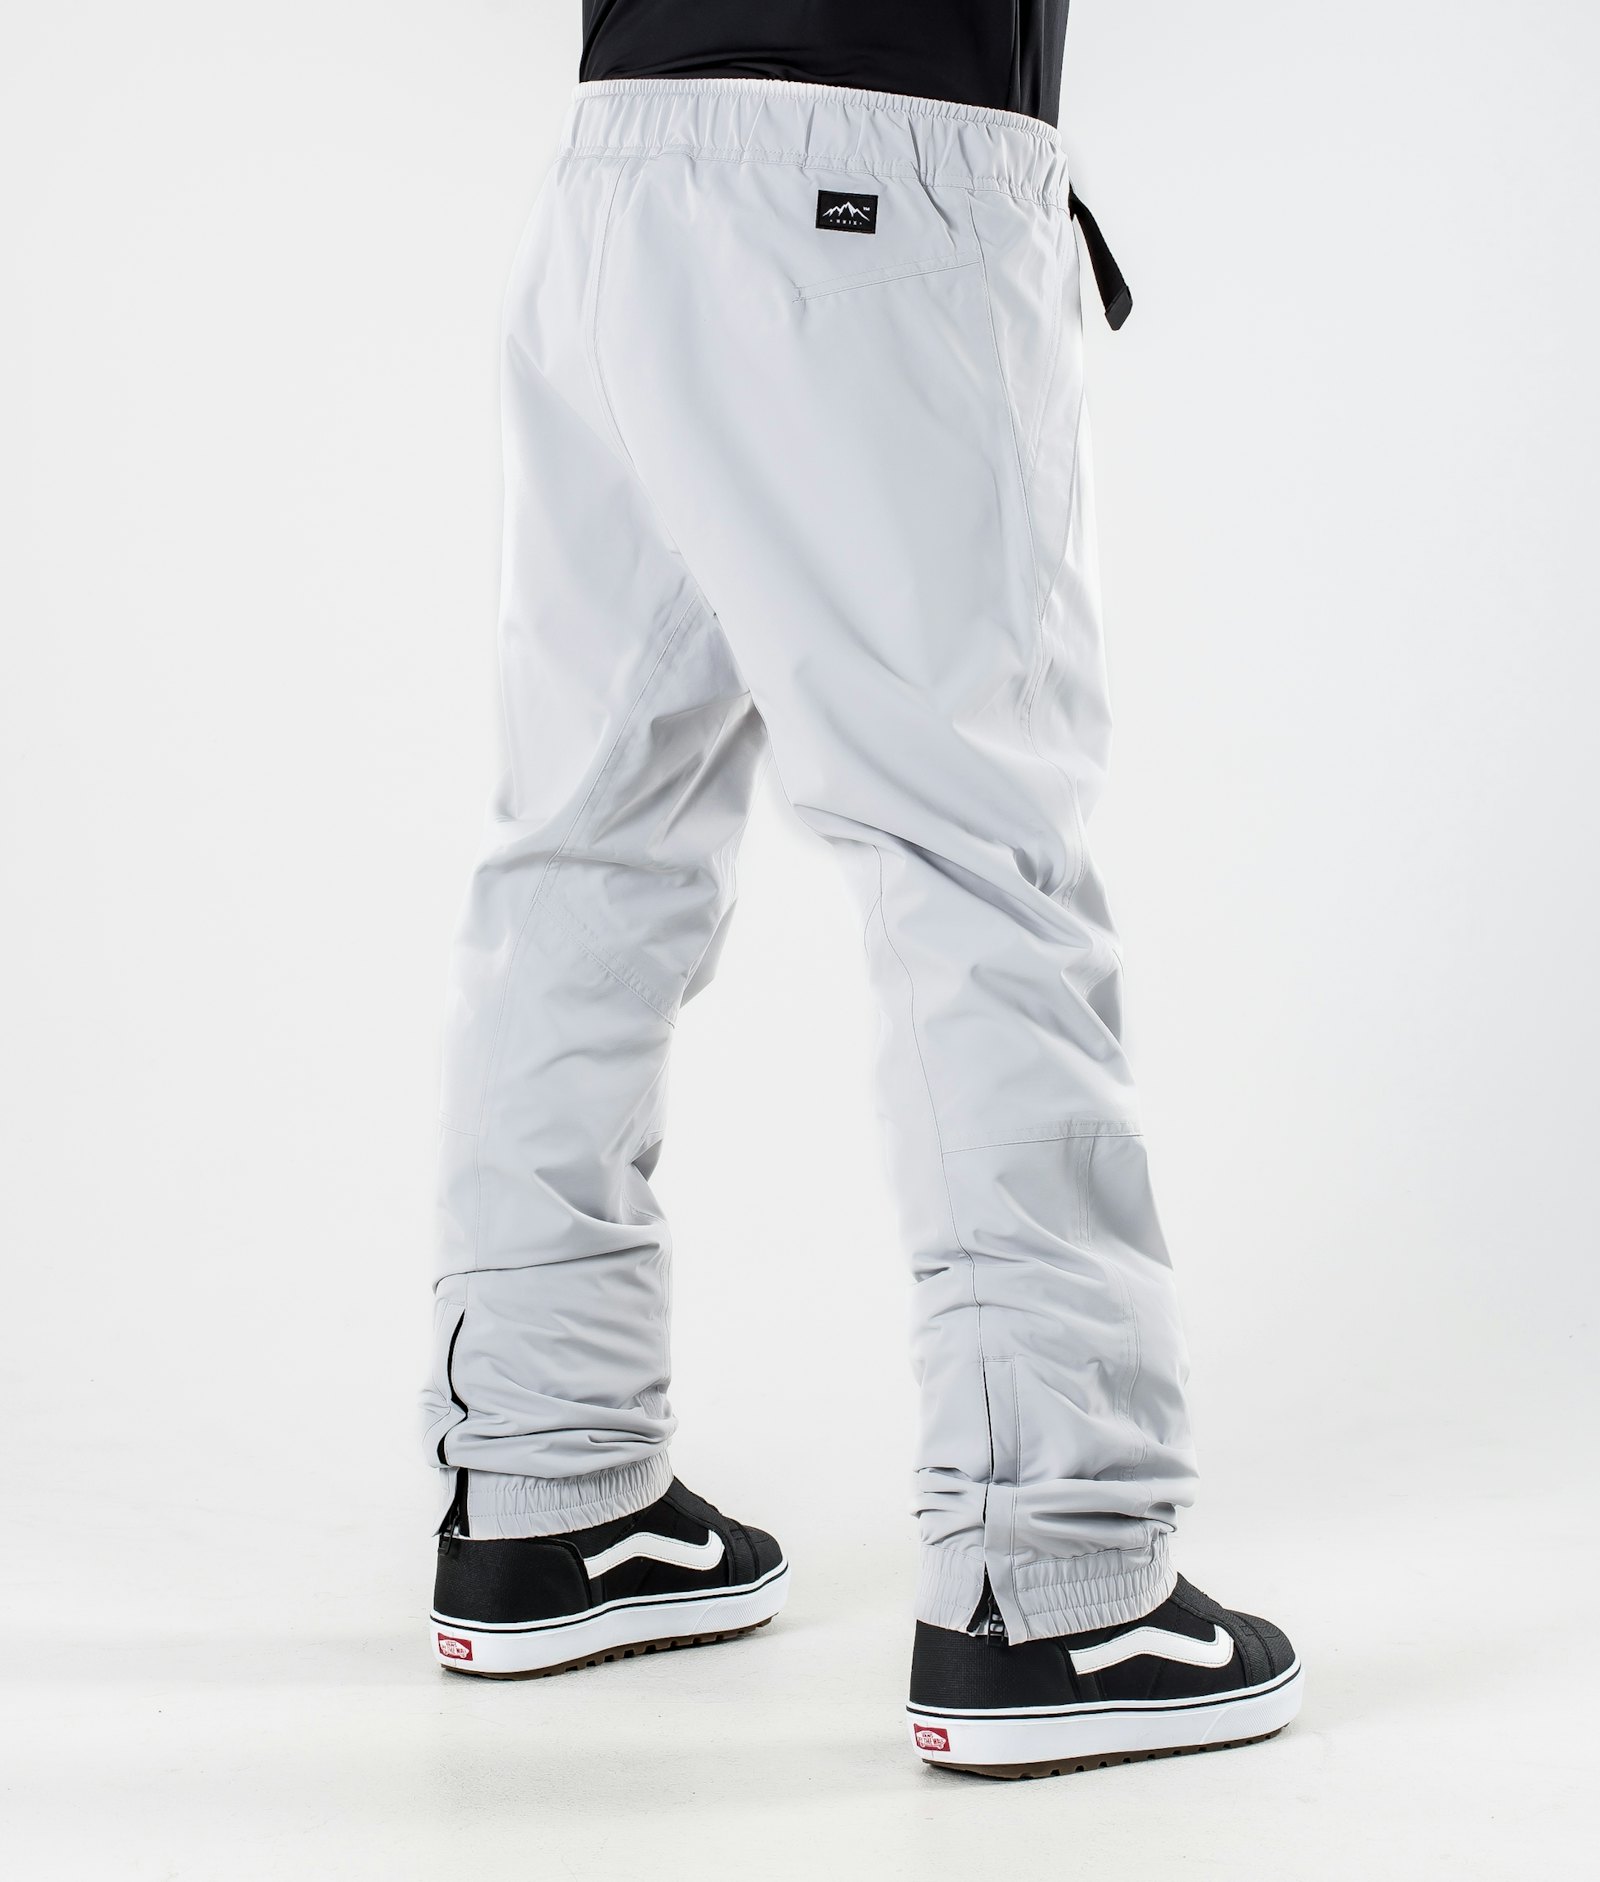 Blizzard 2020 Snowboard Pants Men Light Grey